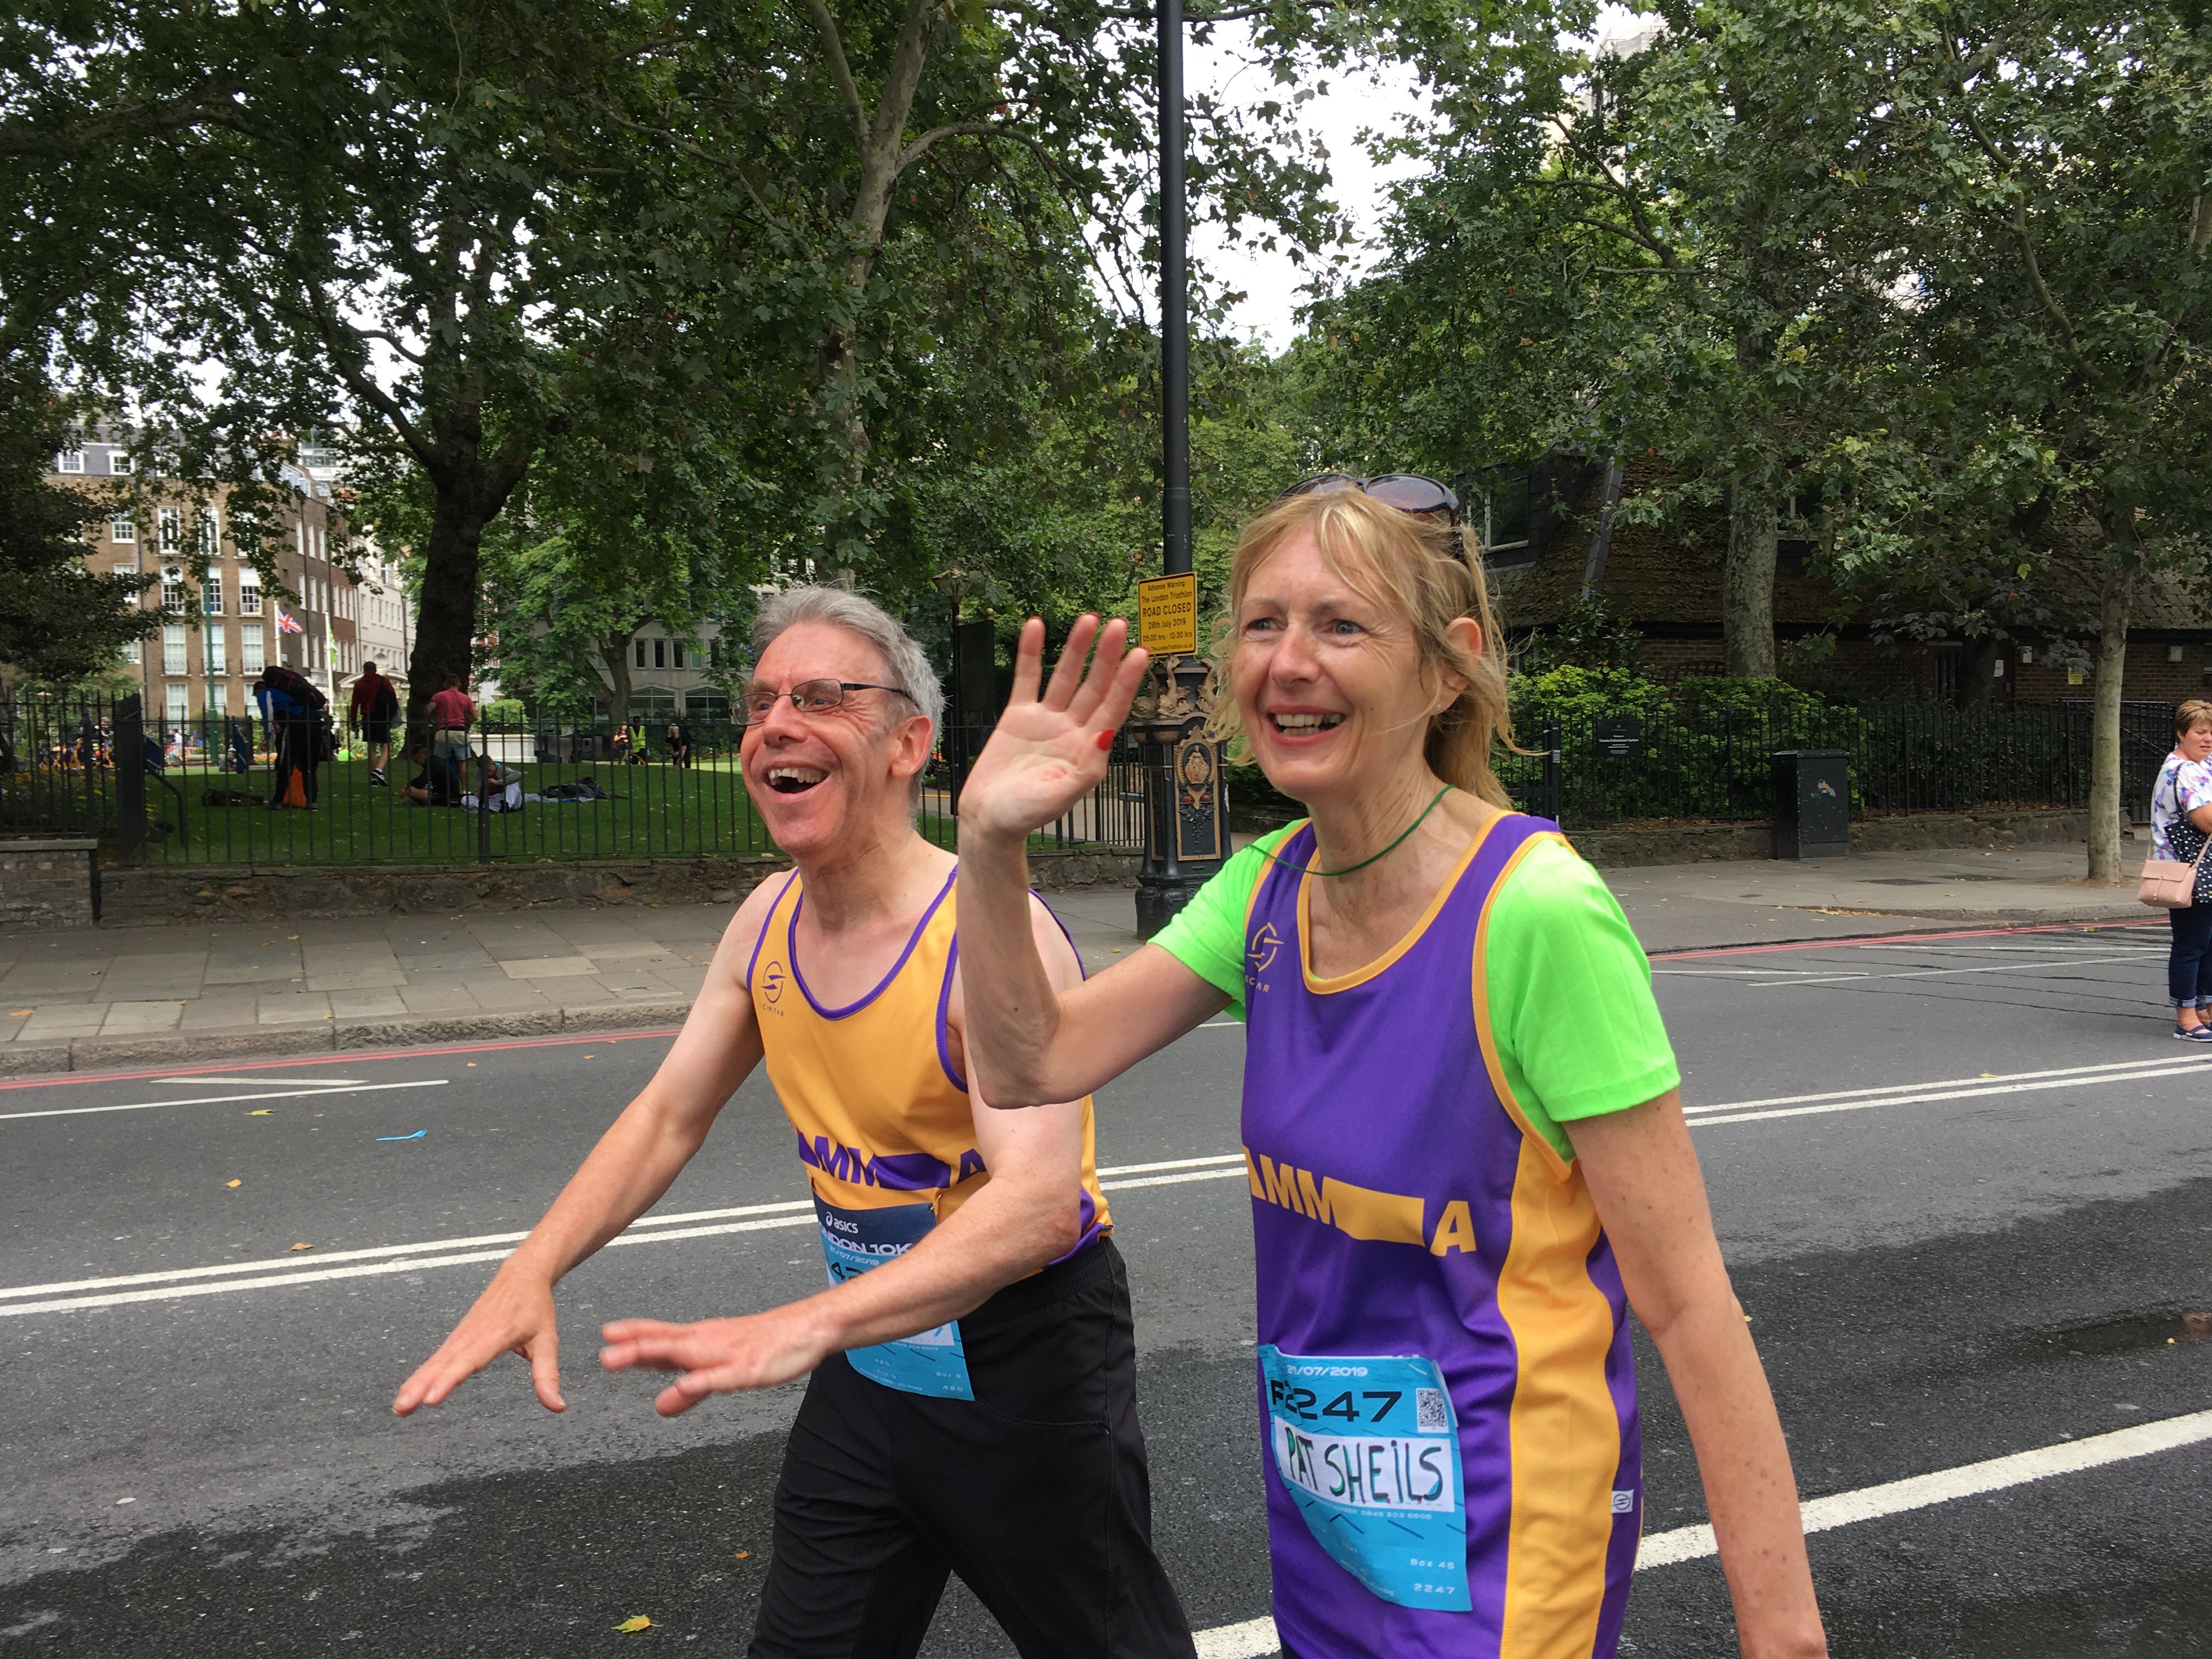 London 10k: John and Pat running